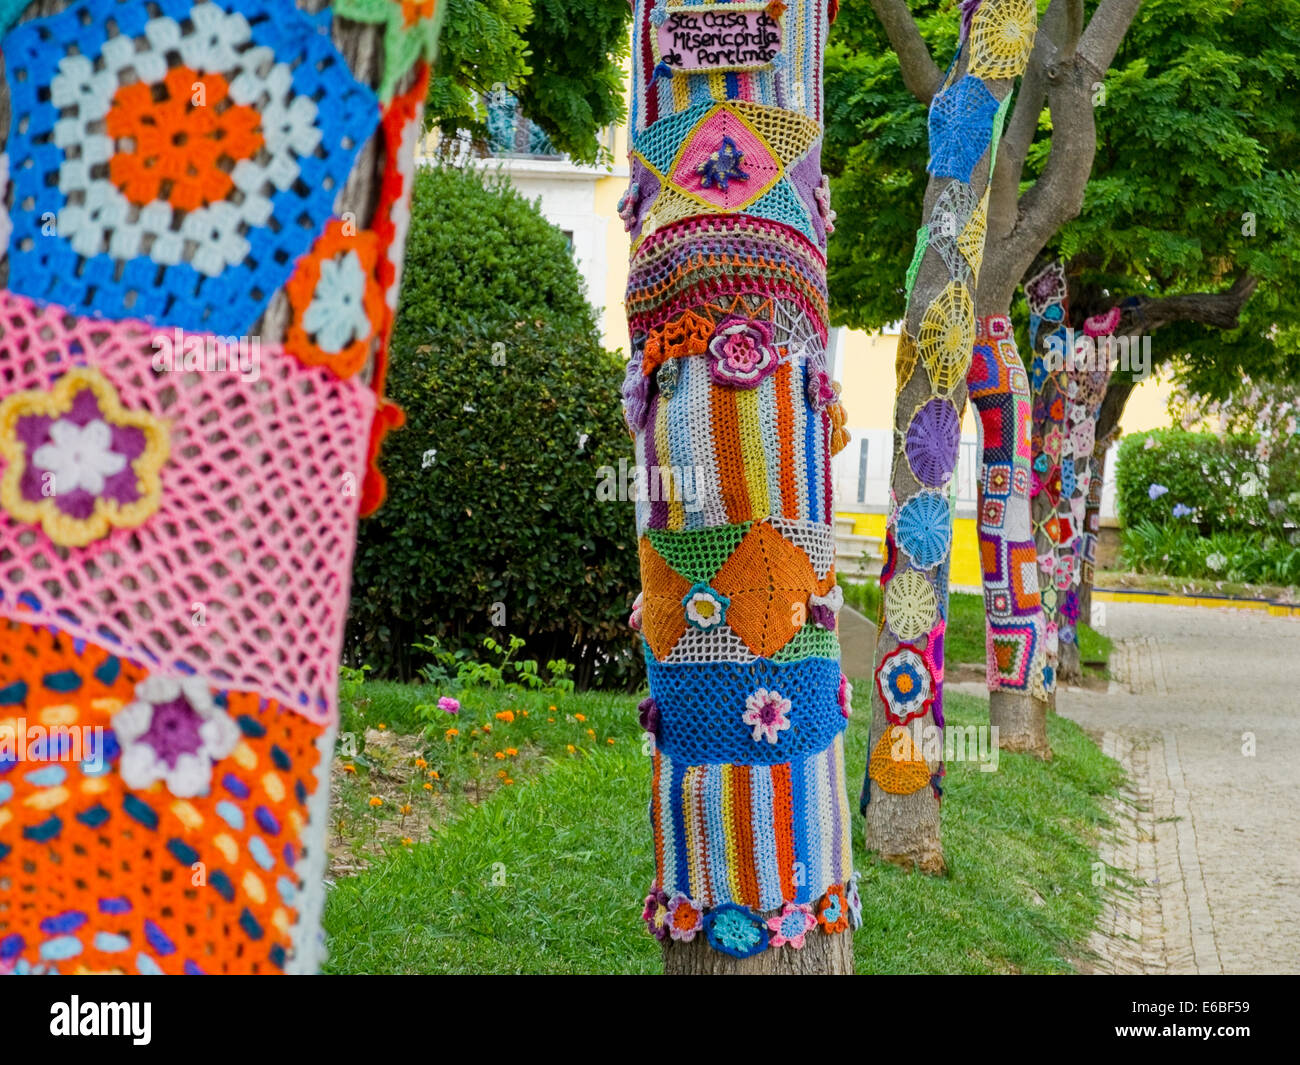 Yarn bombing in a trees. European park. Stock Photo